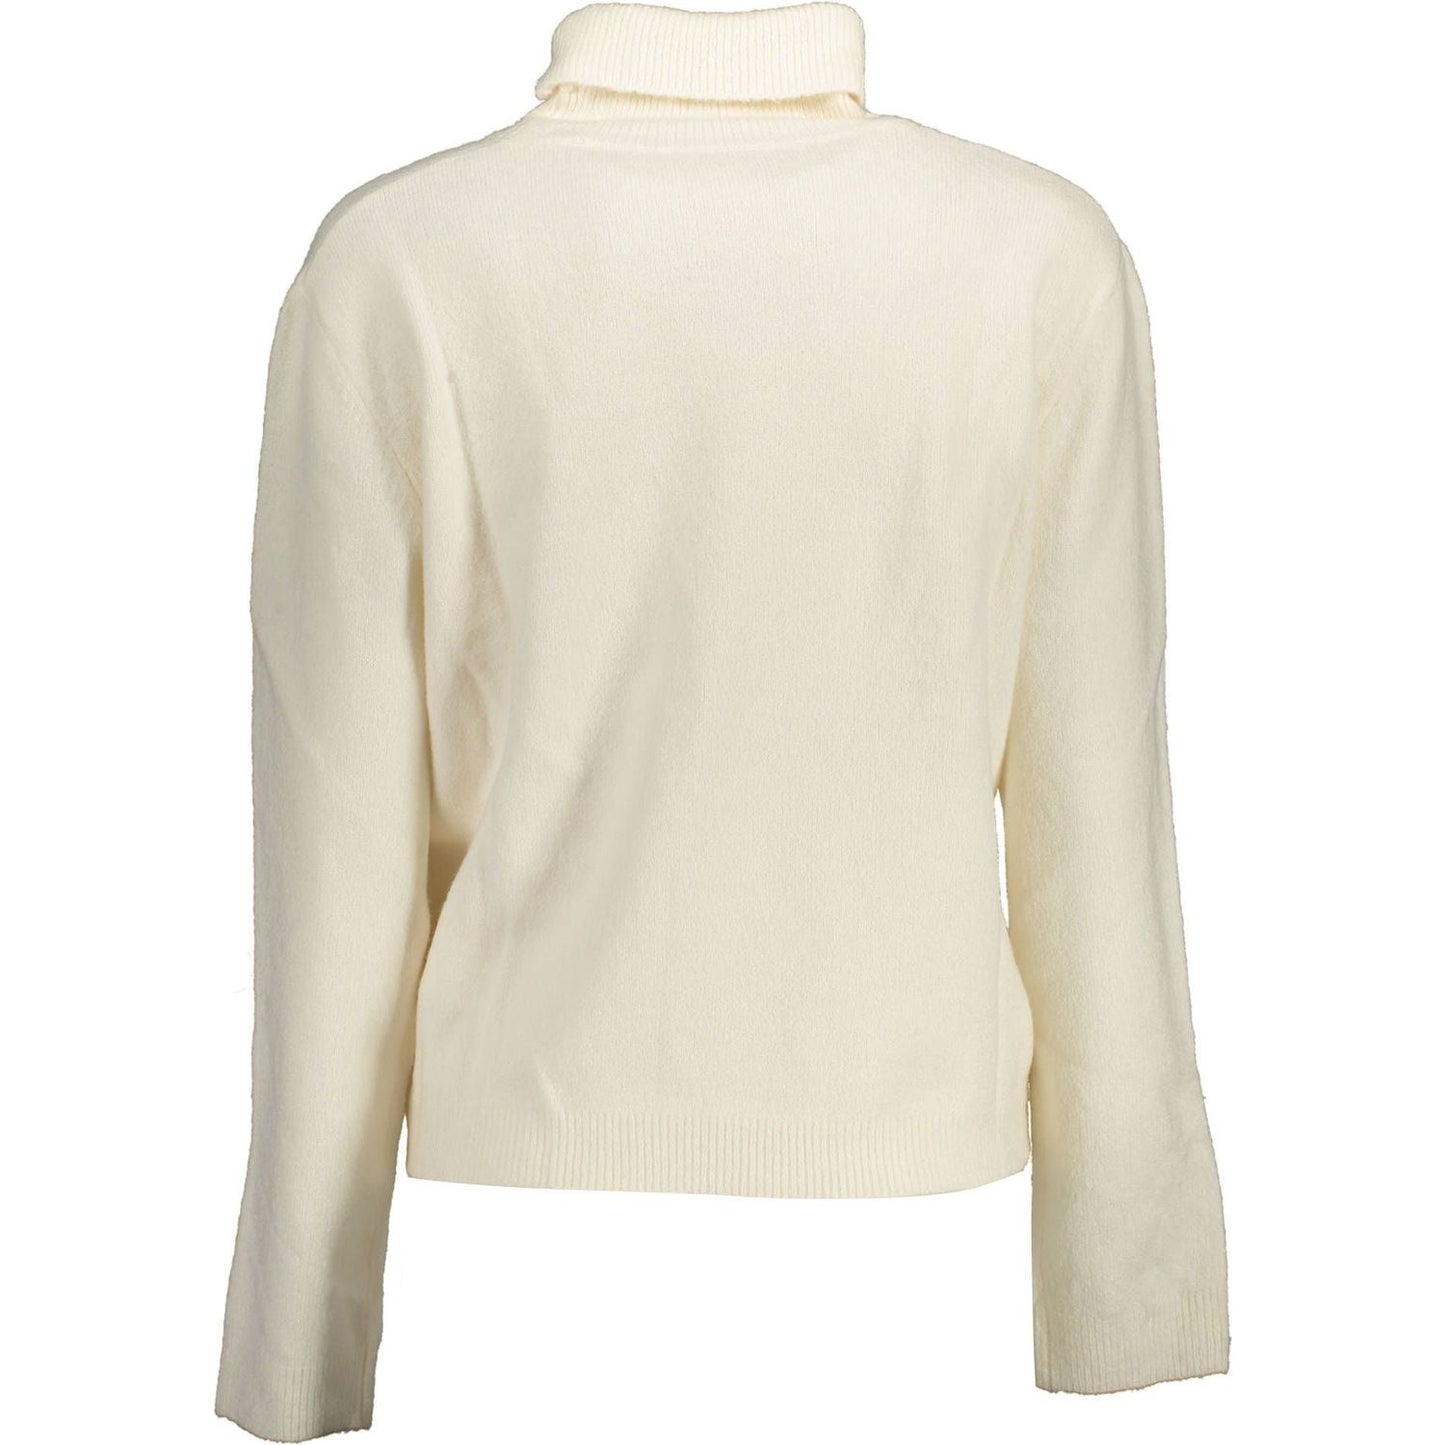 U.S. POLO ASSN.Elegant Turtleneck Sweater with Embroidered LogoMcRichard Designer Brands£109.00